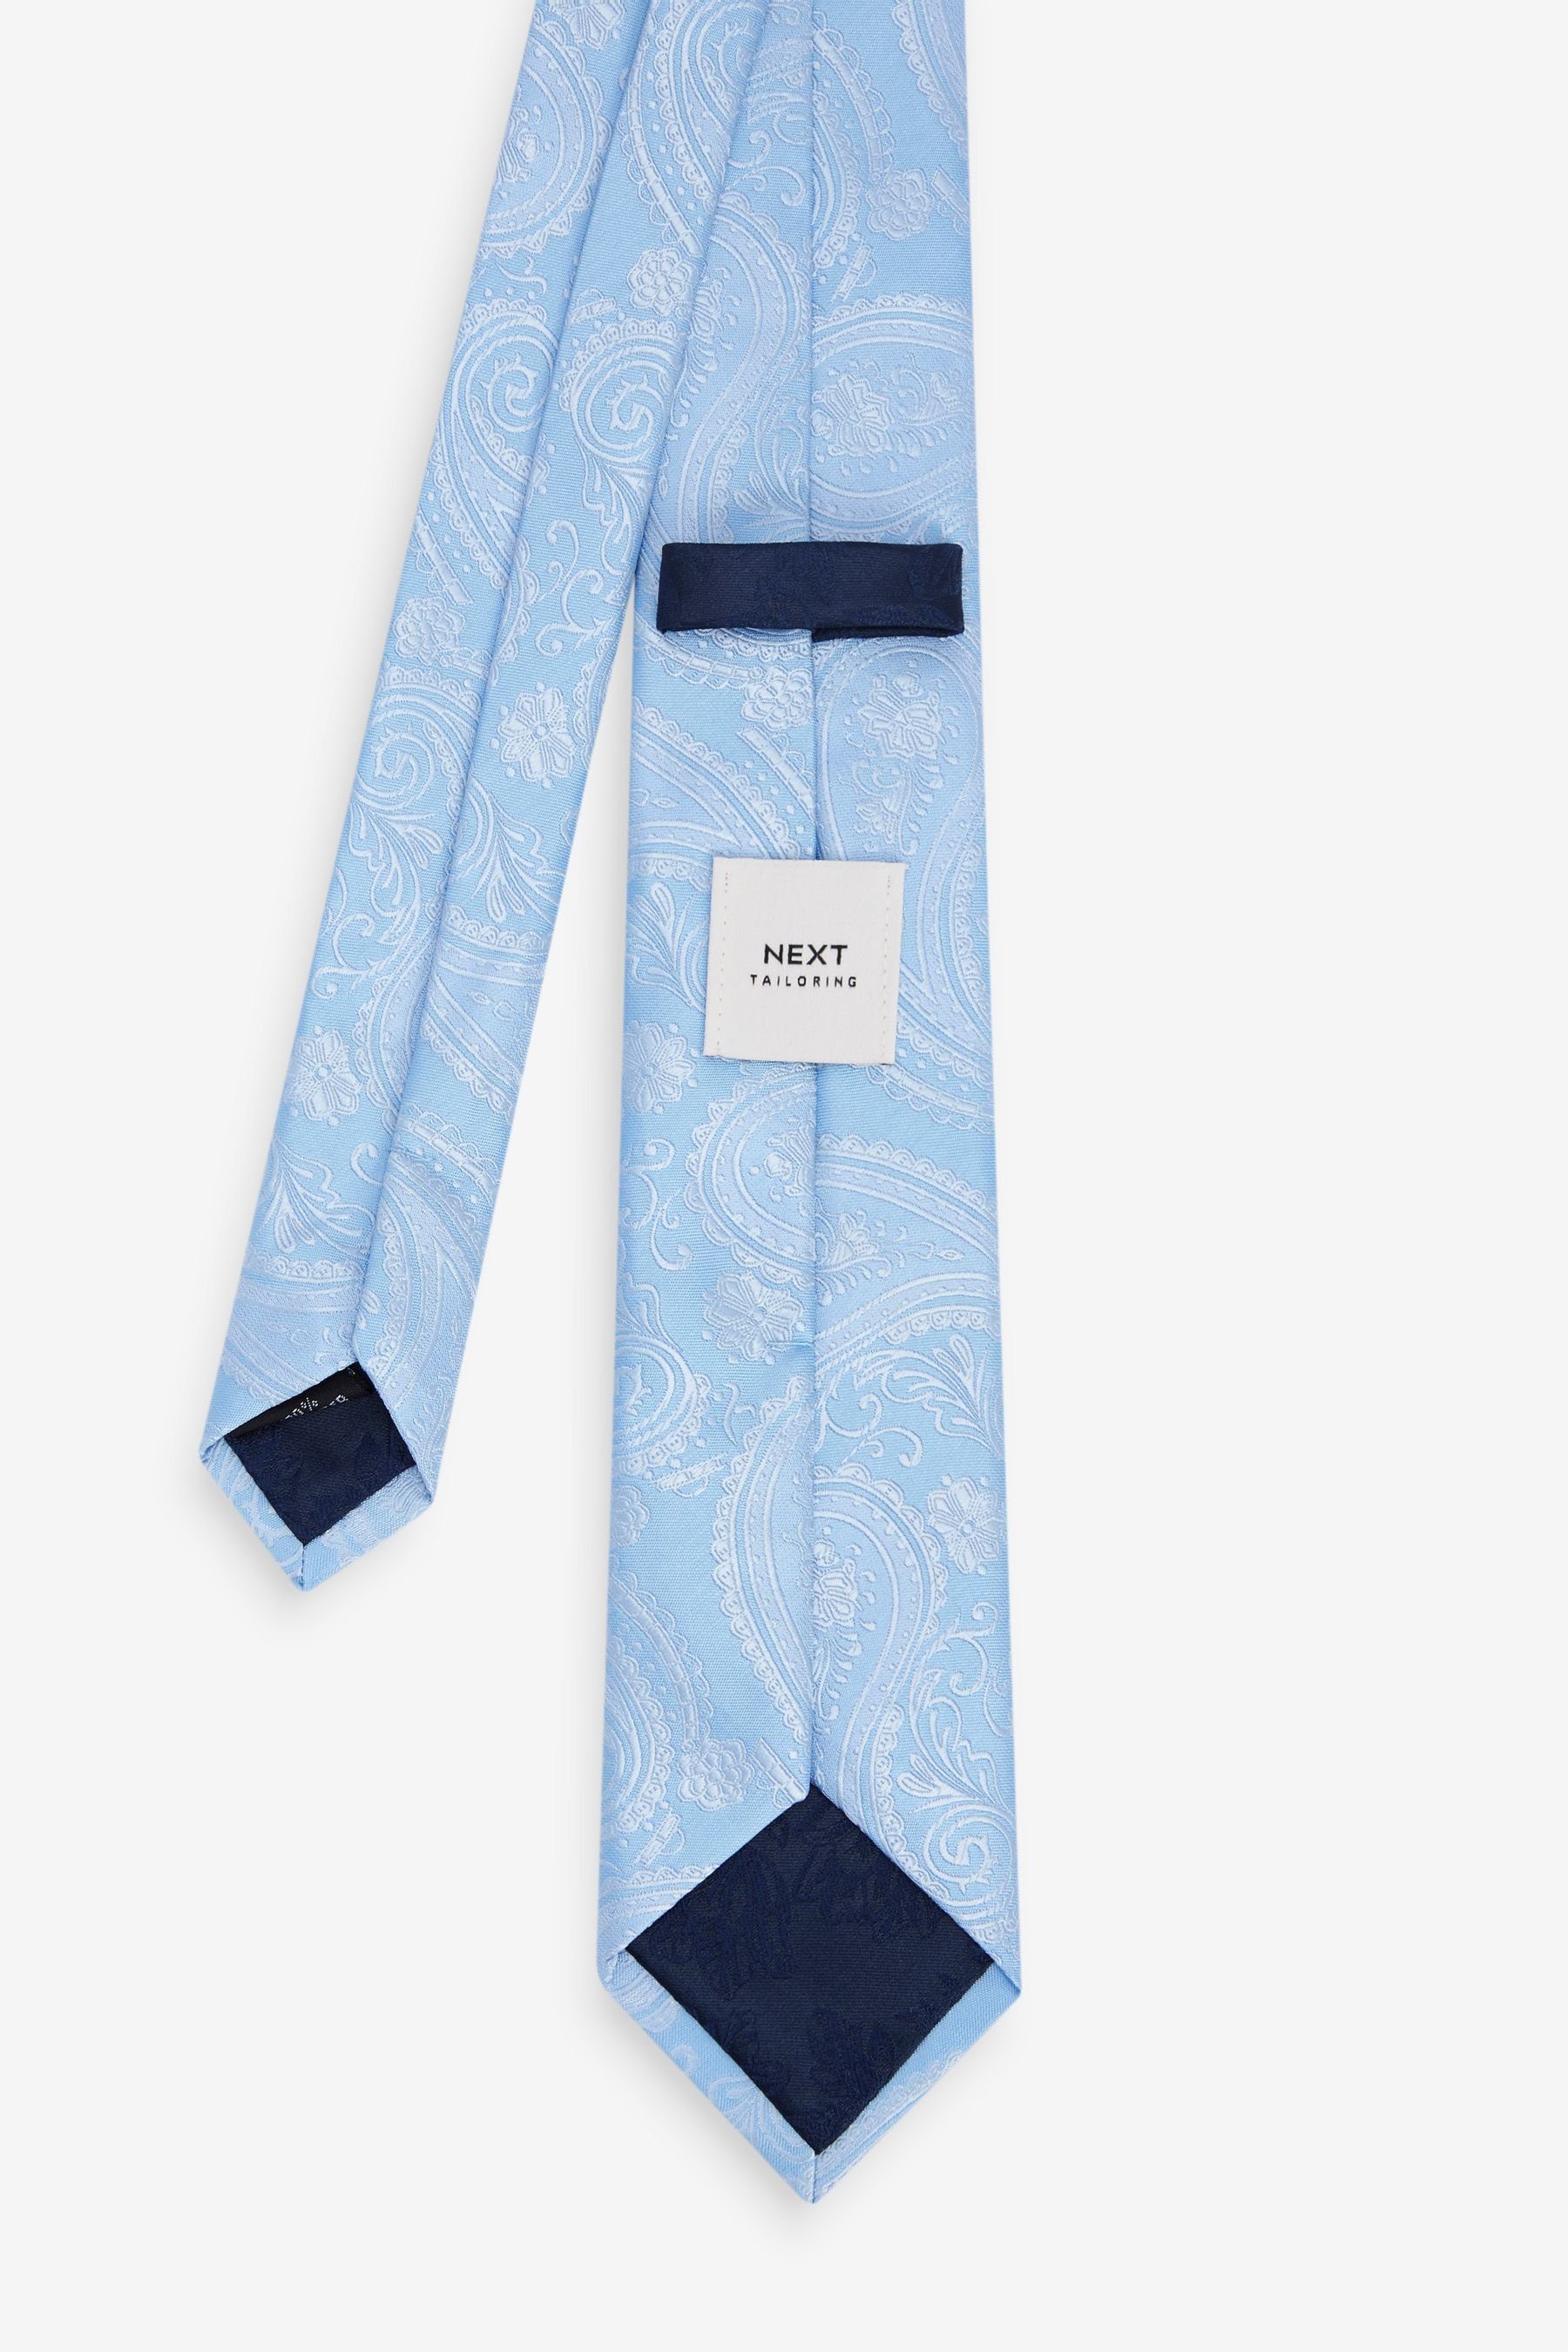 Next Krawattenklammer, Paisley Blue Light Gemusterte Krawatte Slim (2-St) Krawatte mit